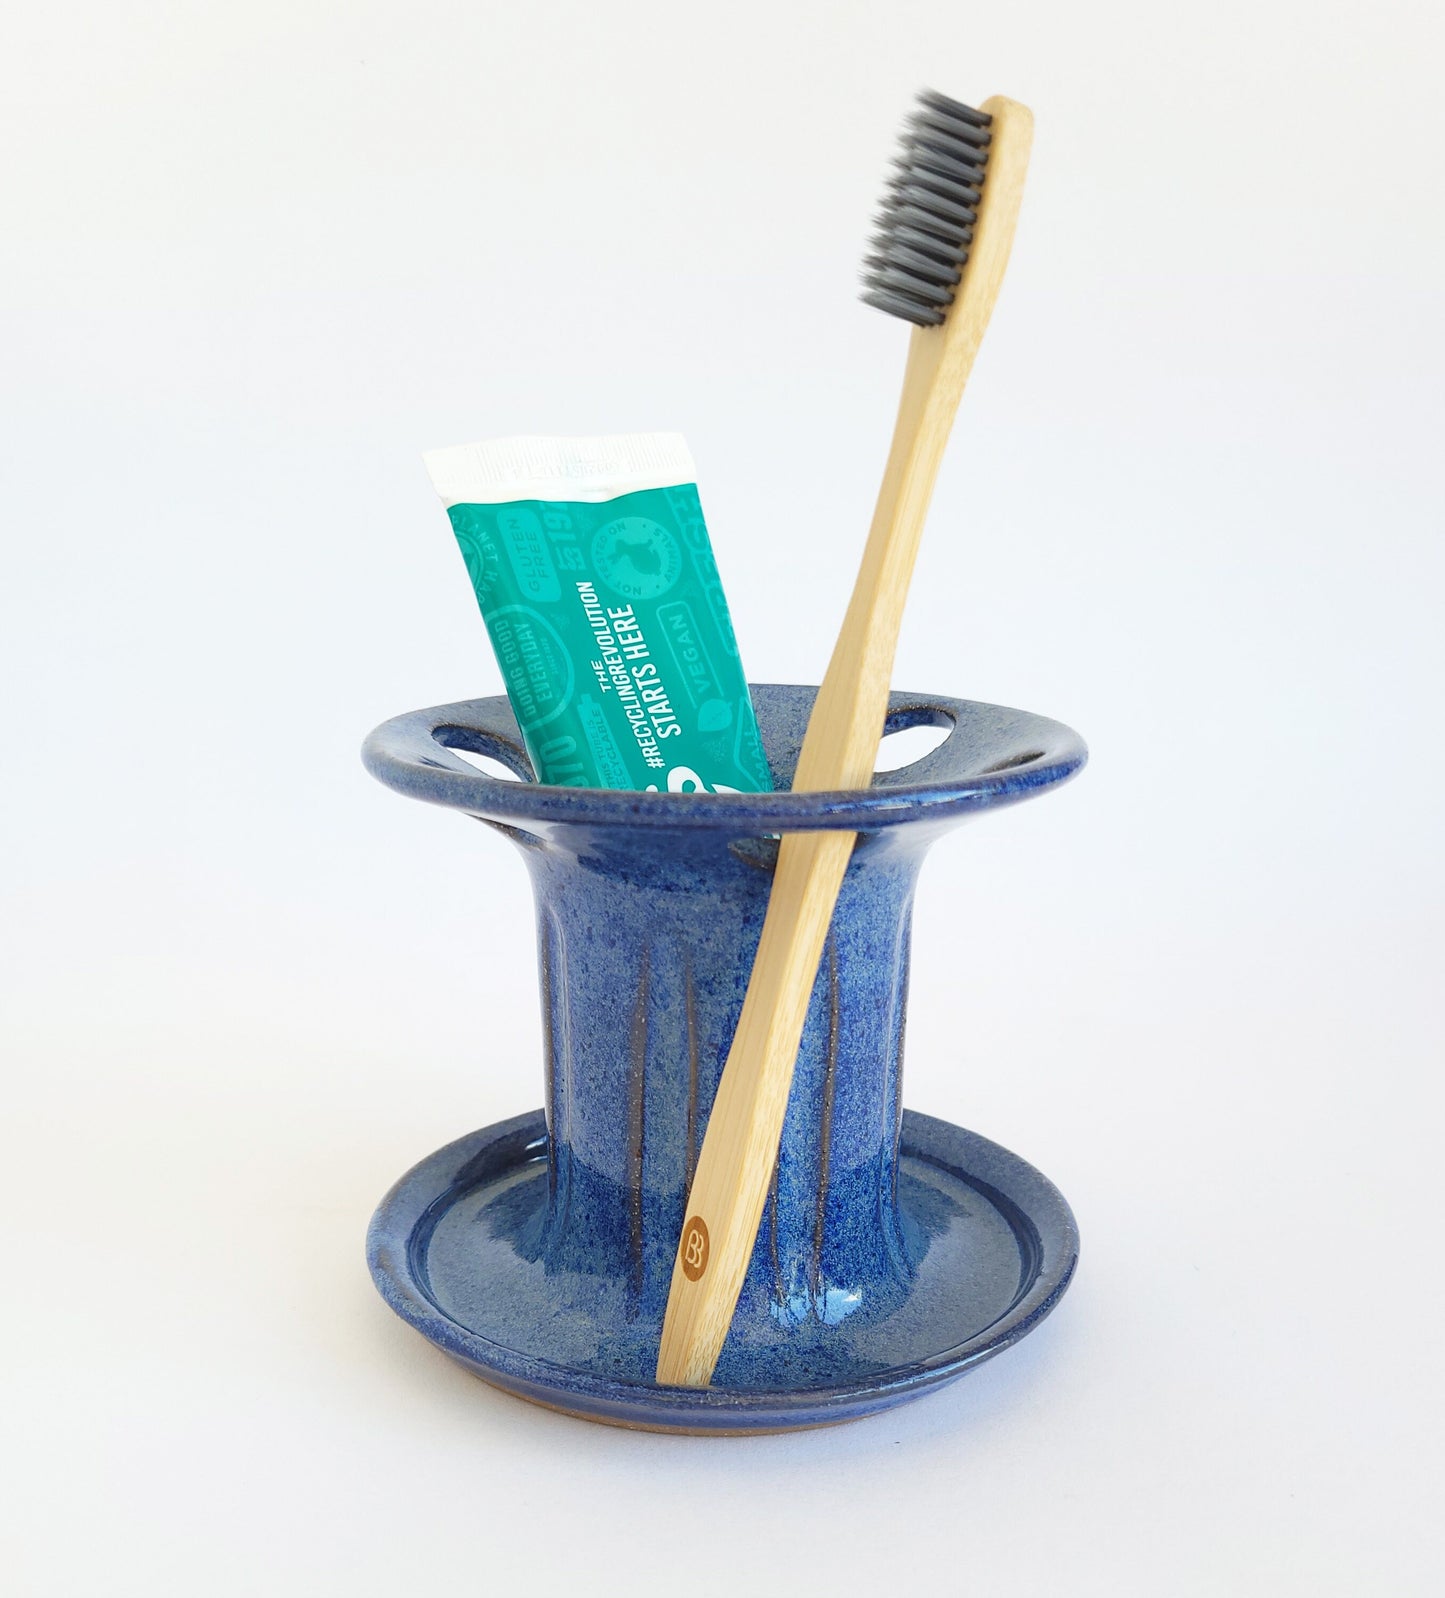 Toothbrush Holder Large Capacity 6 Slots in Cobalt Blue